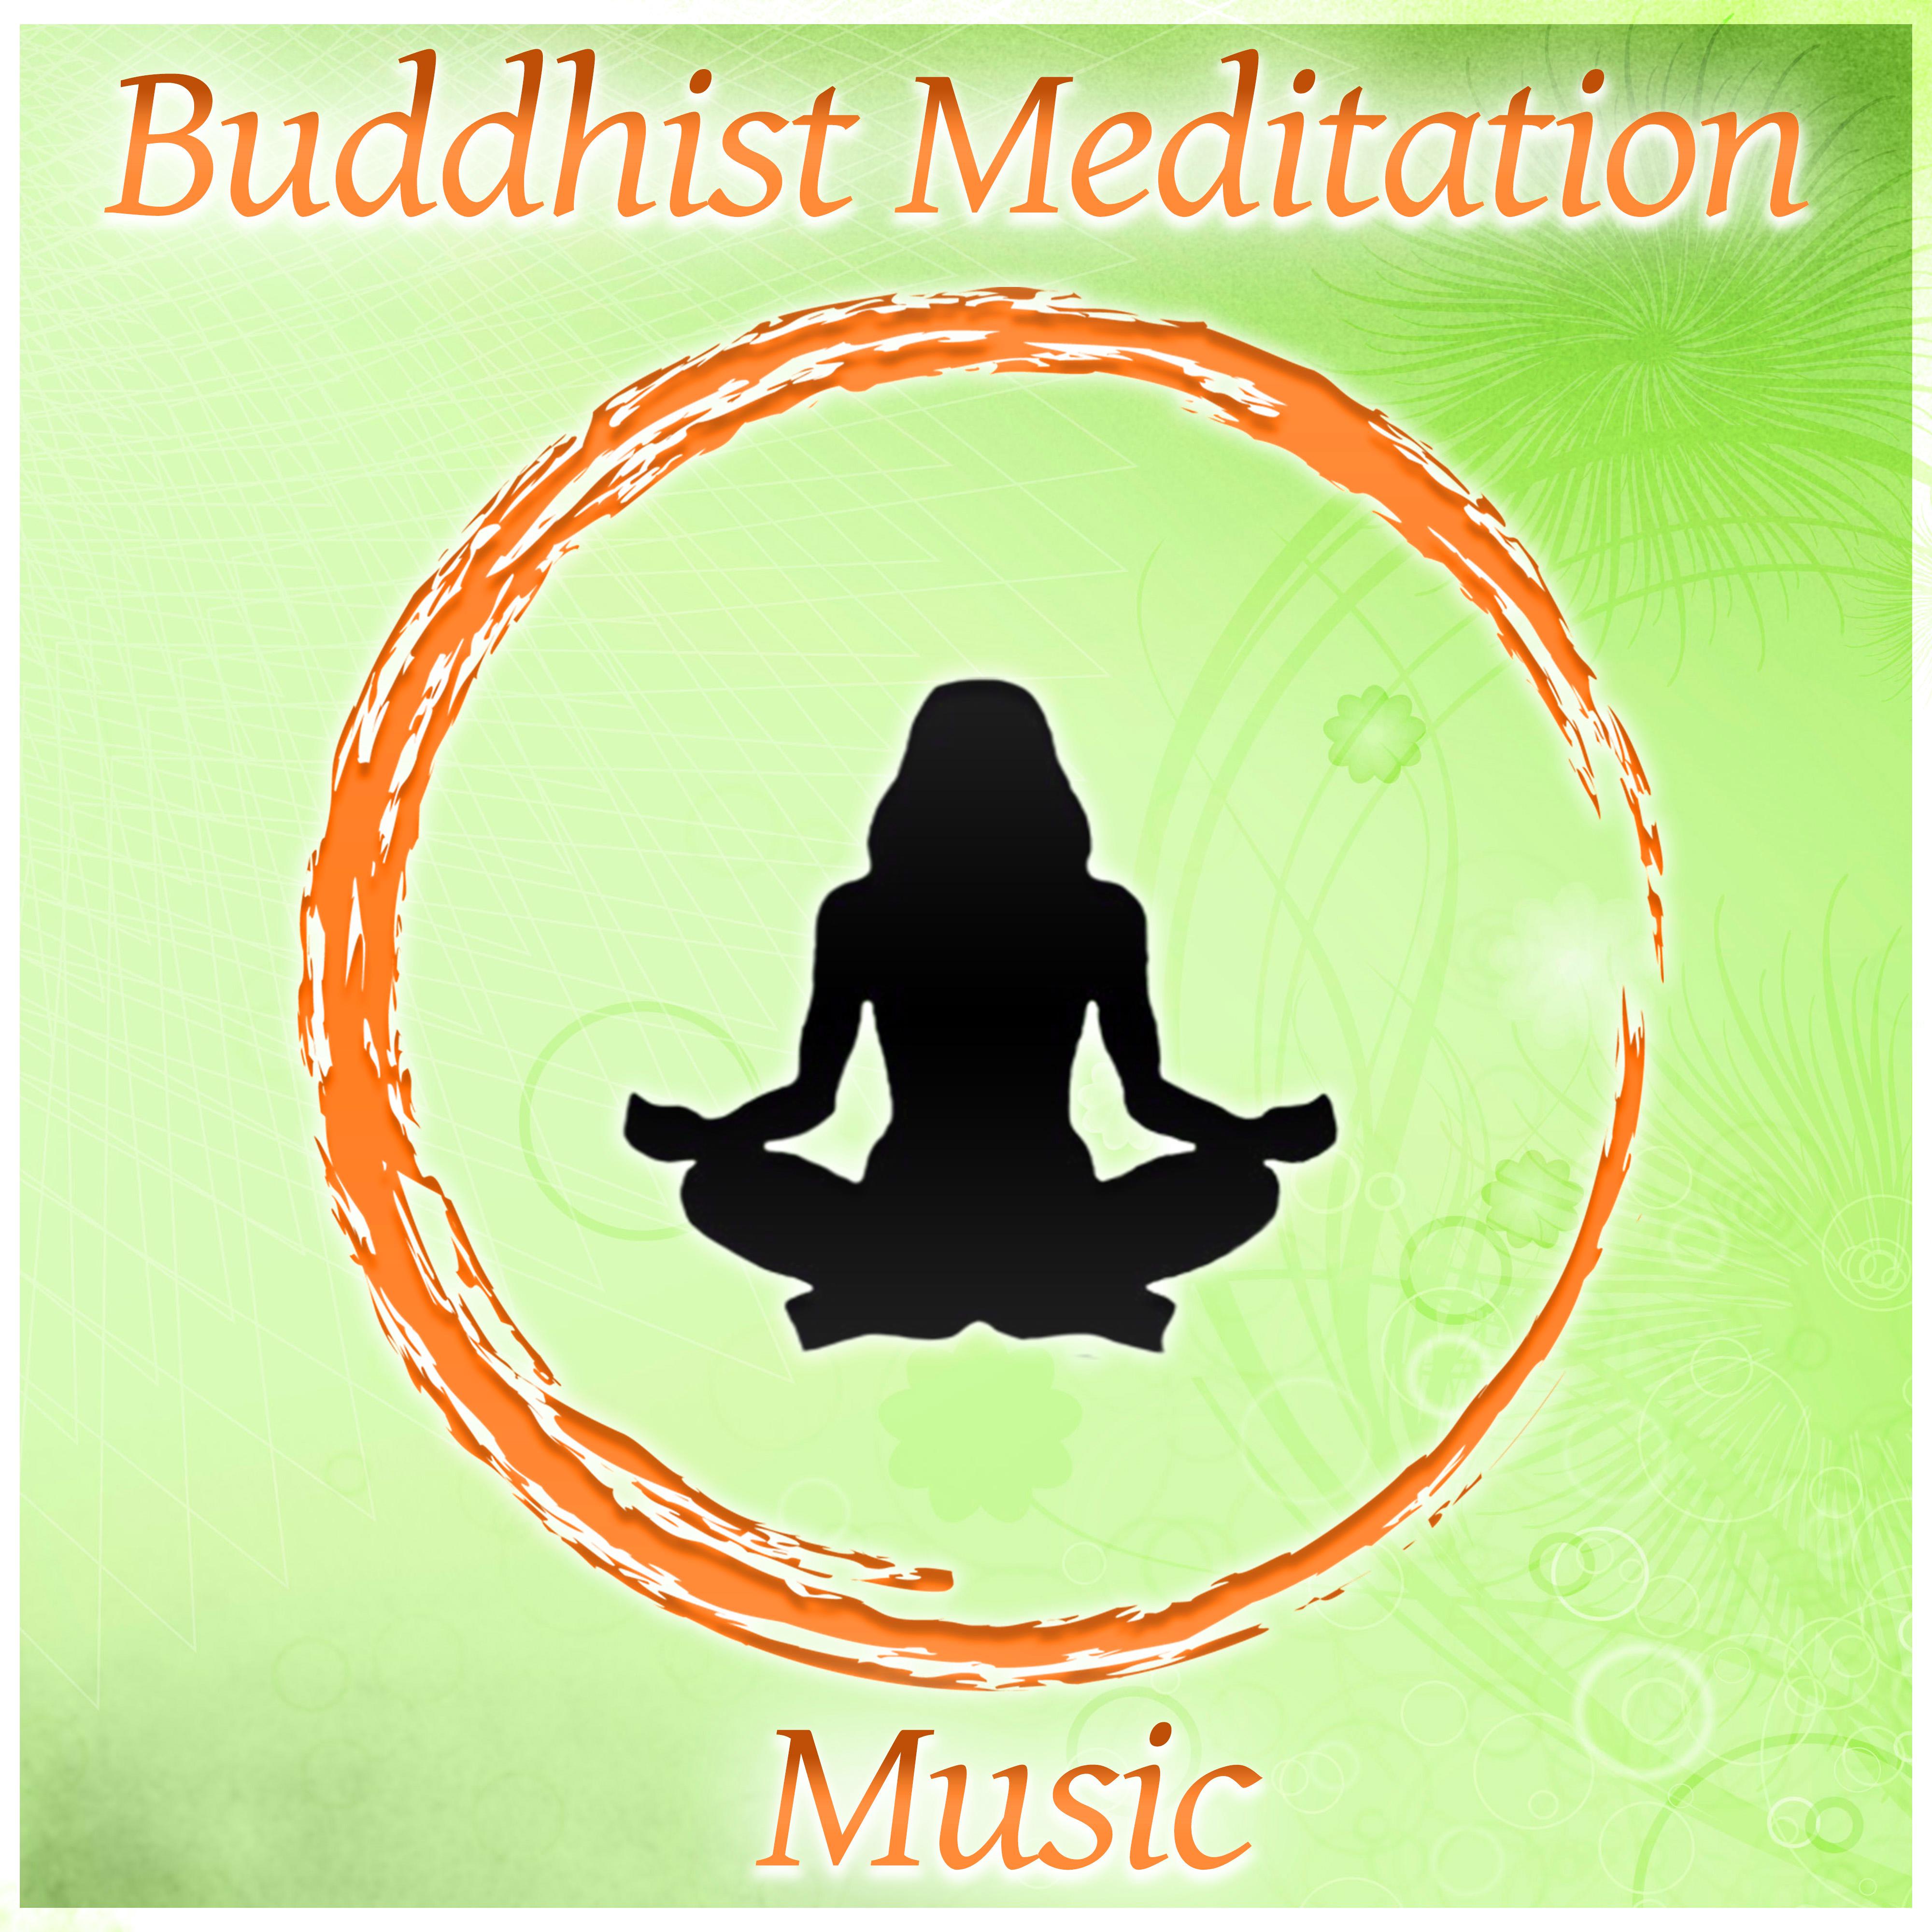 Buddhist Meditation Music  Peaceful Music to Practise Meditation, Healing Nature Sounds, Yoga, Zen Garden, Chakra Balancing, Relaxation  Sleep